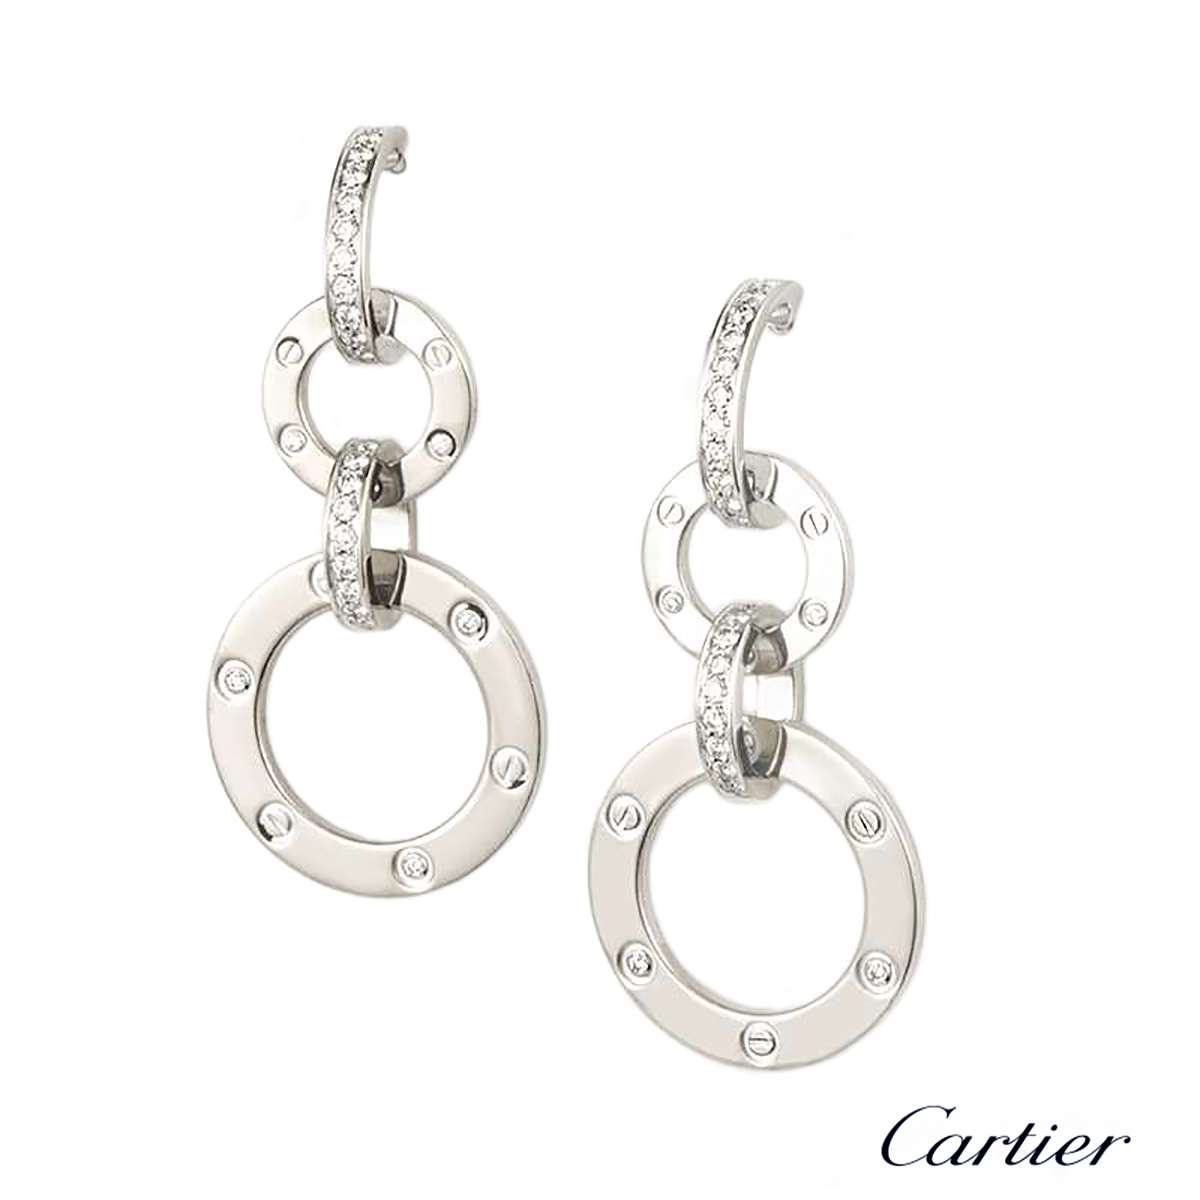 cartier signature earrings